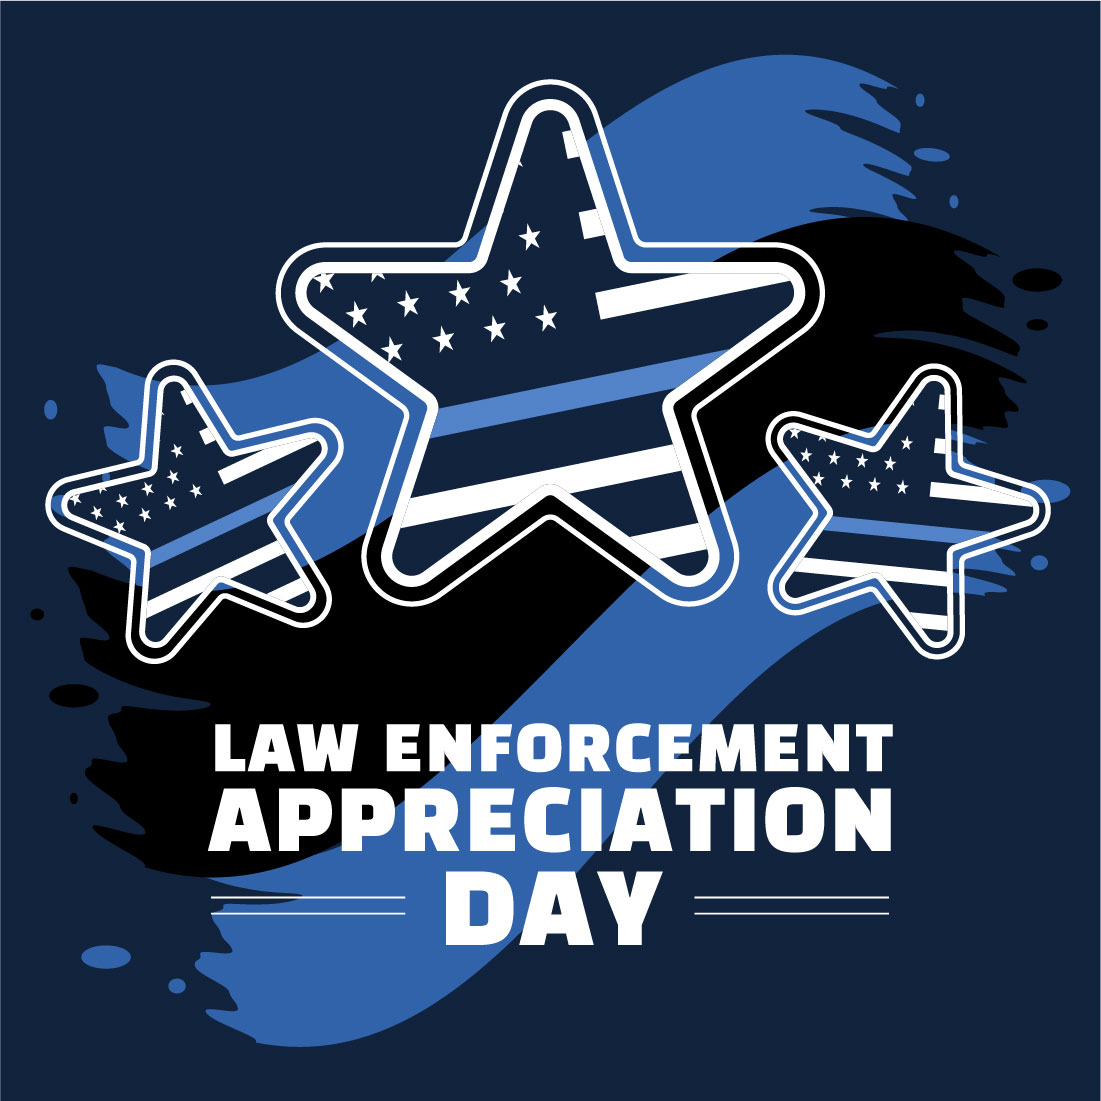 Cartoon Law Enforcement Appreciation Day Design Illustration cover image.